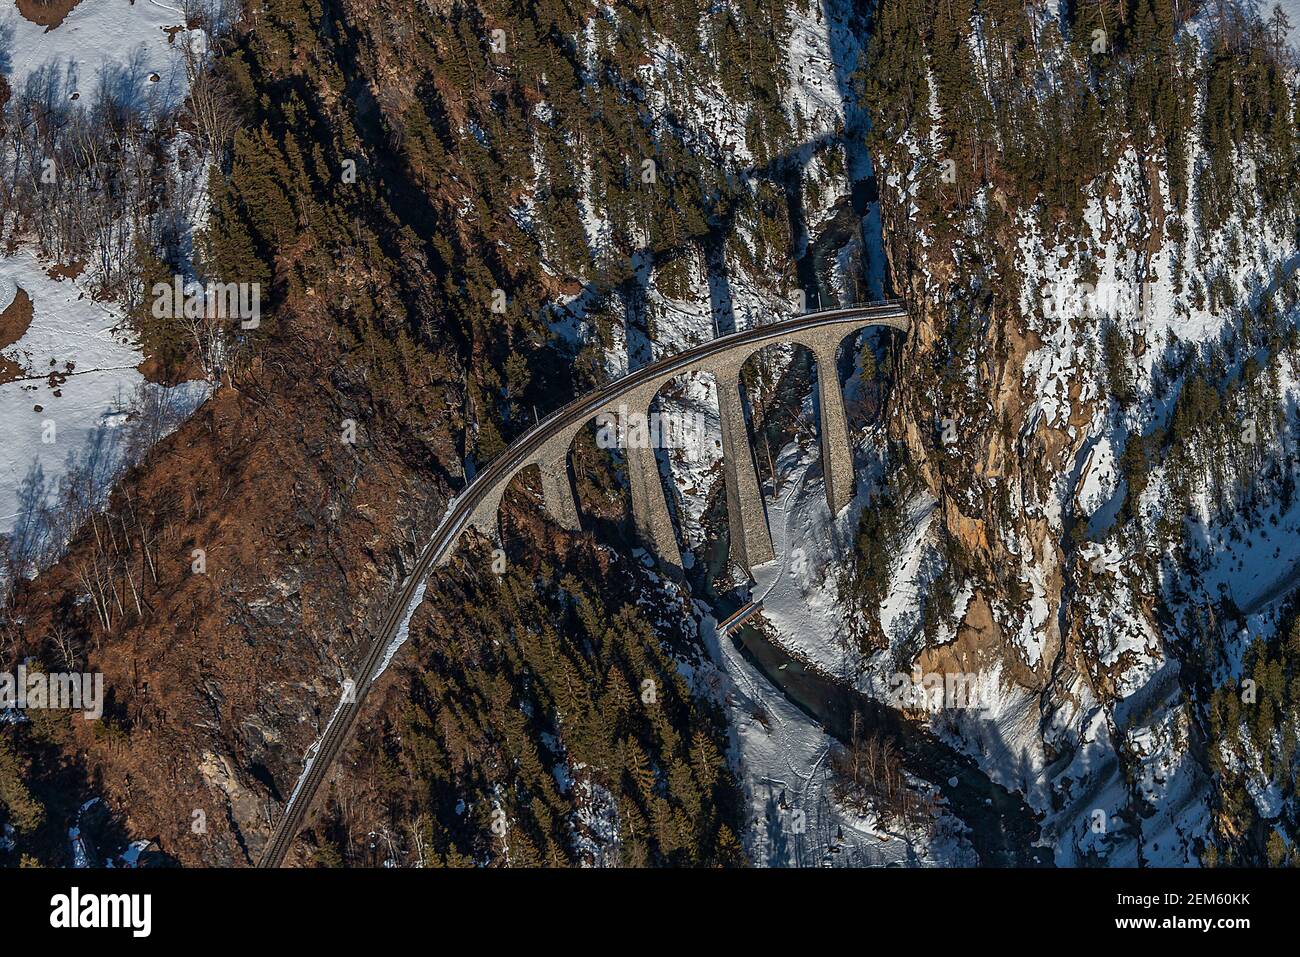 The Rhaetian Railway's Landwasser Viaduct in Switzerland. Stock Photo